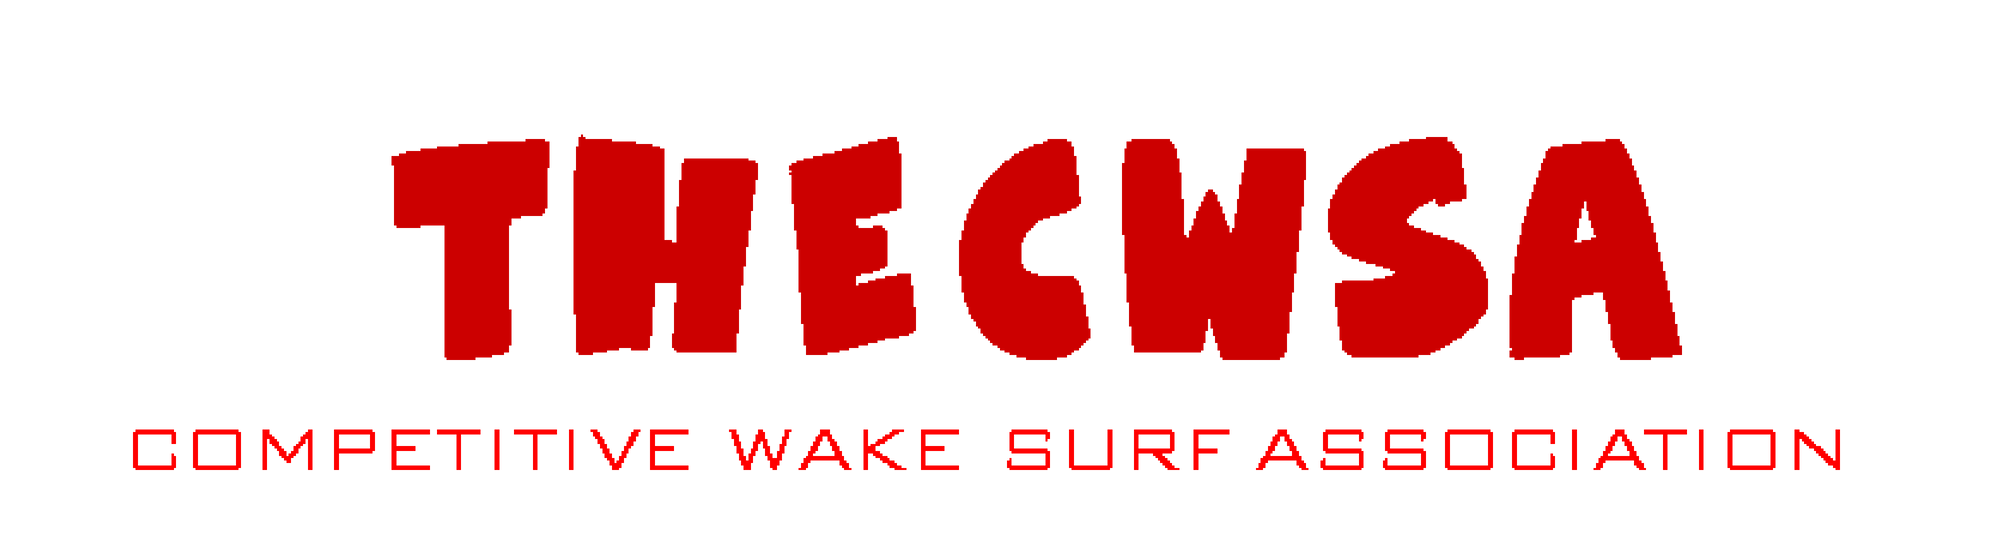 Competitive Wake Surf Association